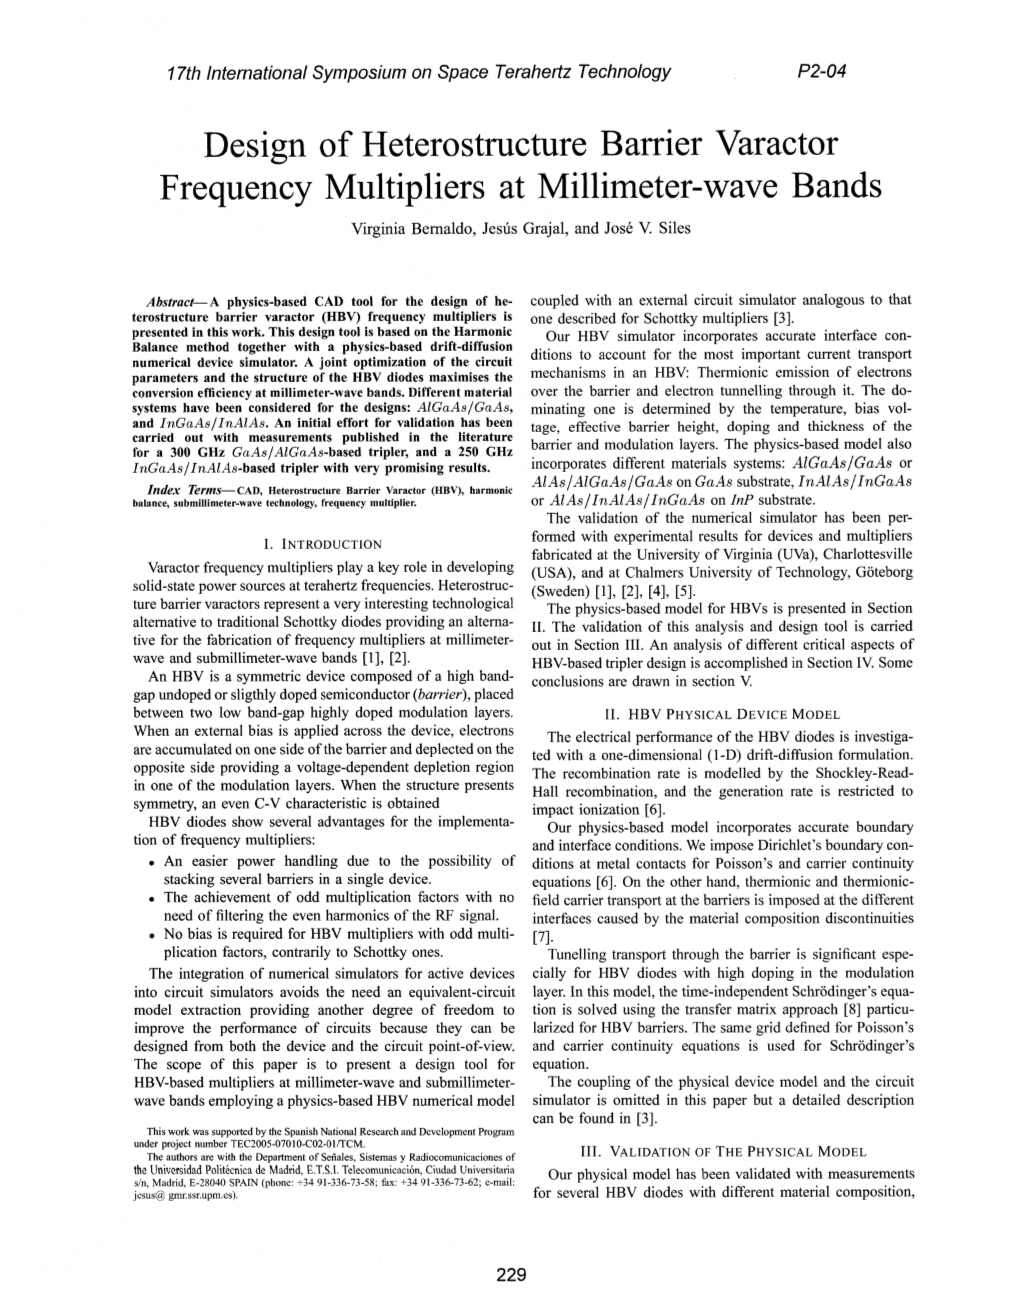 Design of Heterostmcture Barrier Varactor Frequency Multipliers at Millimeter-Wave Bands